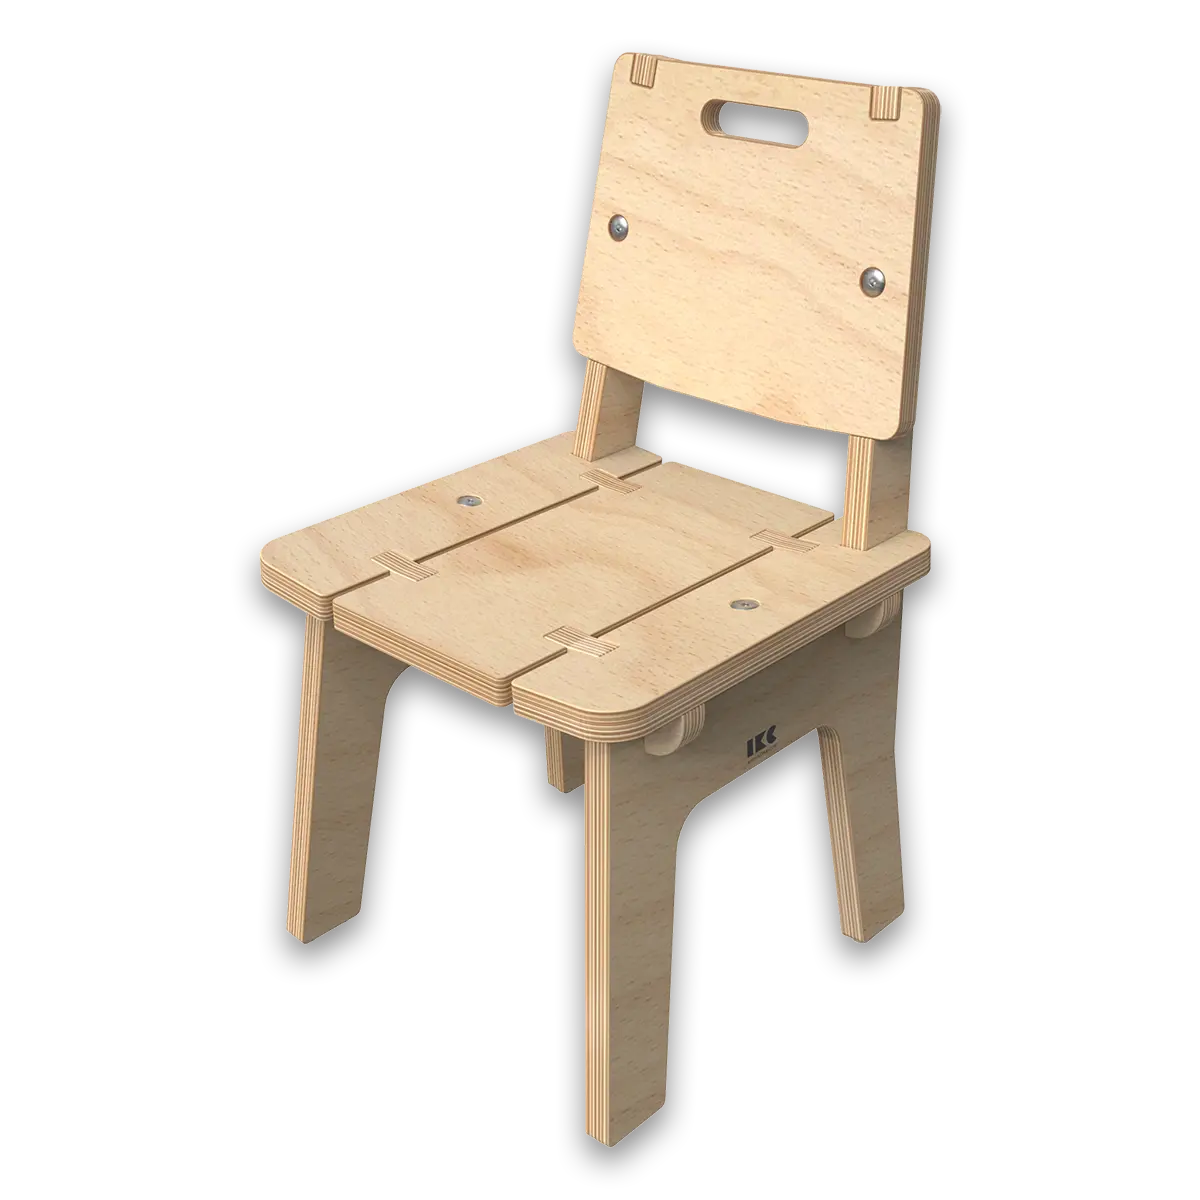 Cat Buxus-Chair-Stoeltje-Hout-Angled2-Touchscreen-Kindertouchscreen-Speelhoek-Kinderhoek-Kinderspeelhoek-Wandspel-kinderstoel